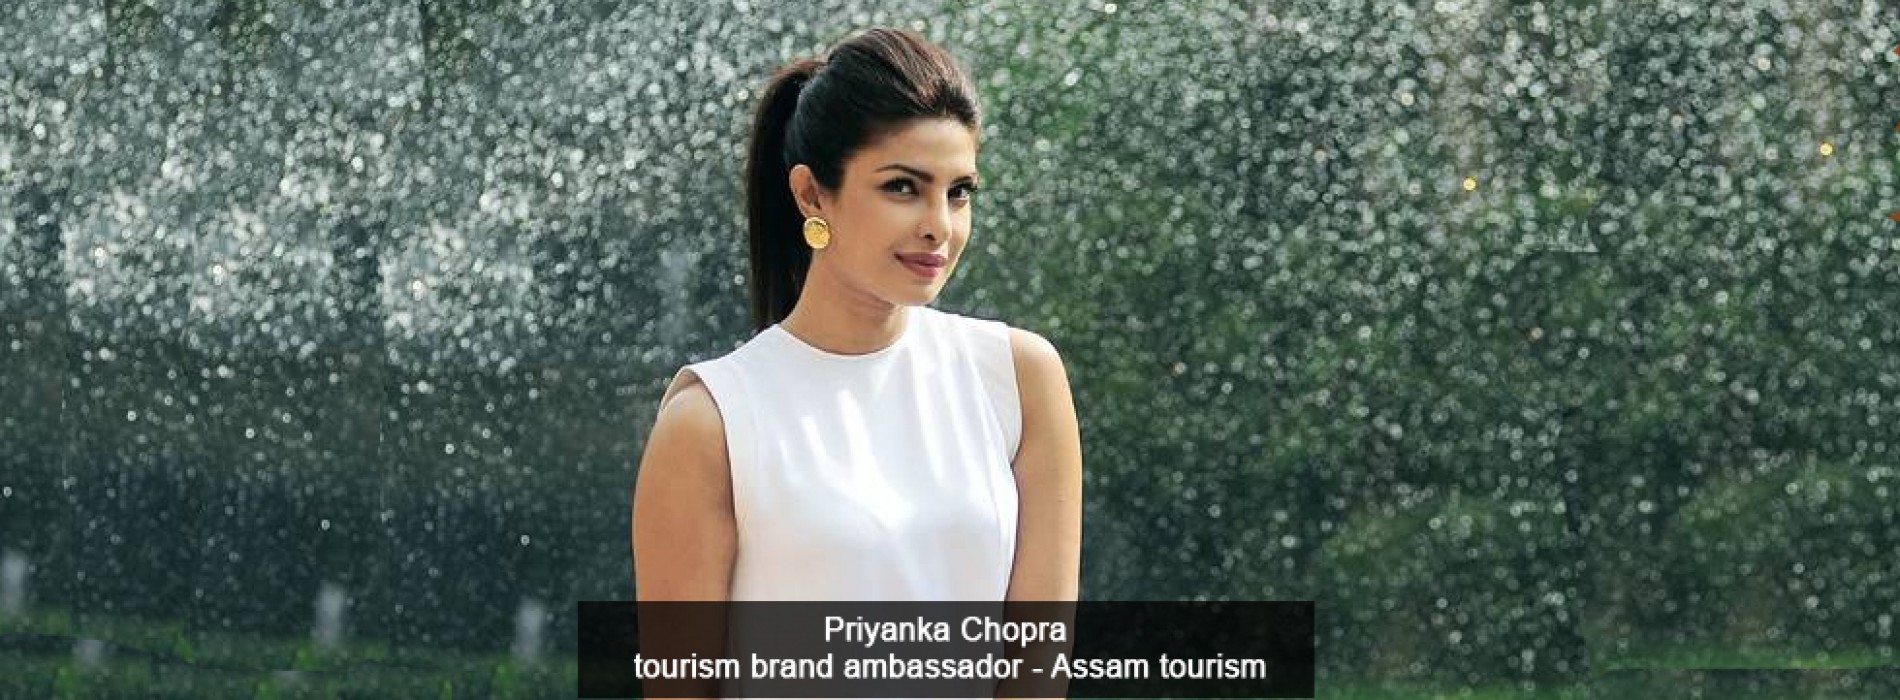 Assam signs Priyanka Chopra as tourism brand ambassador